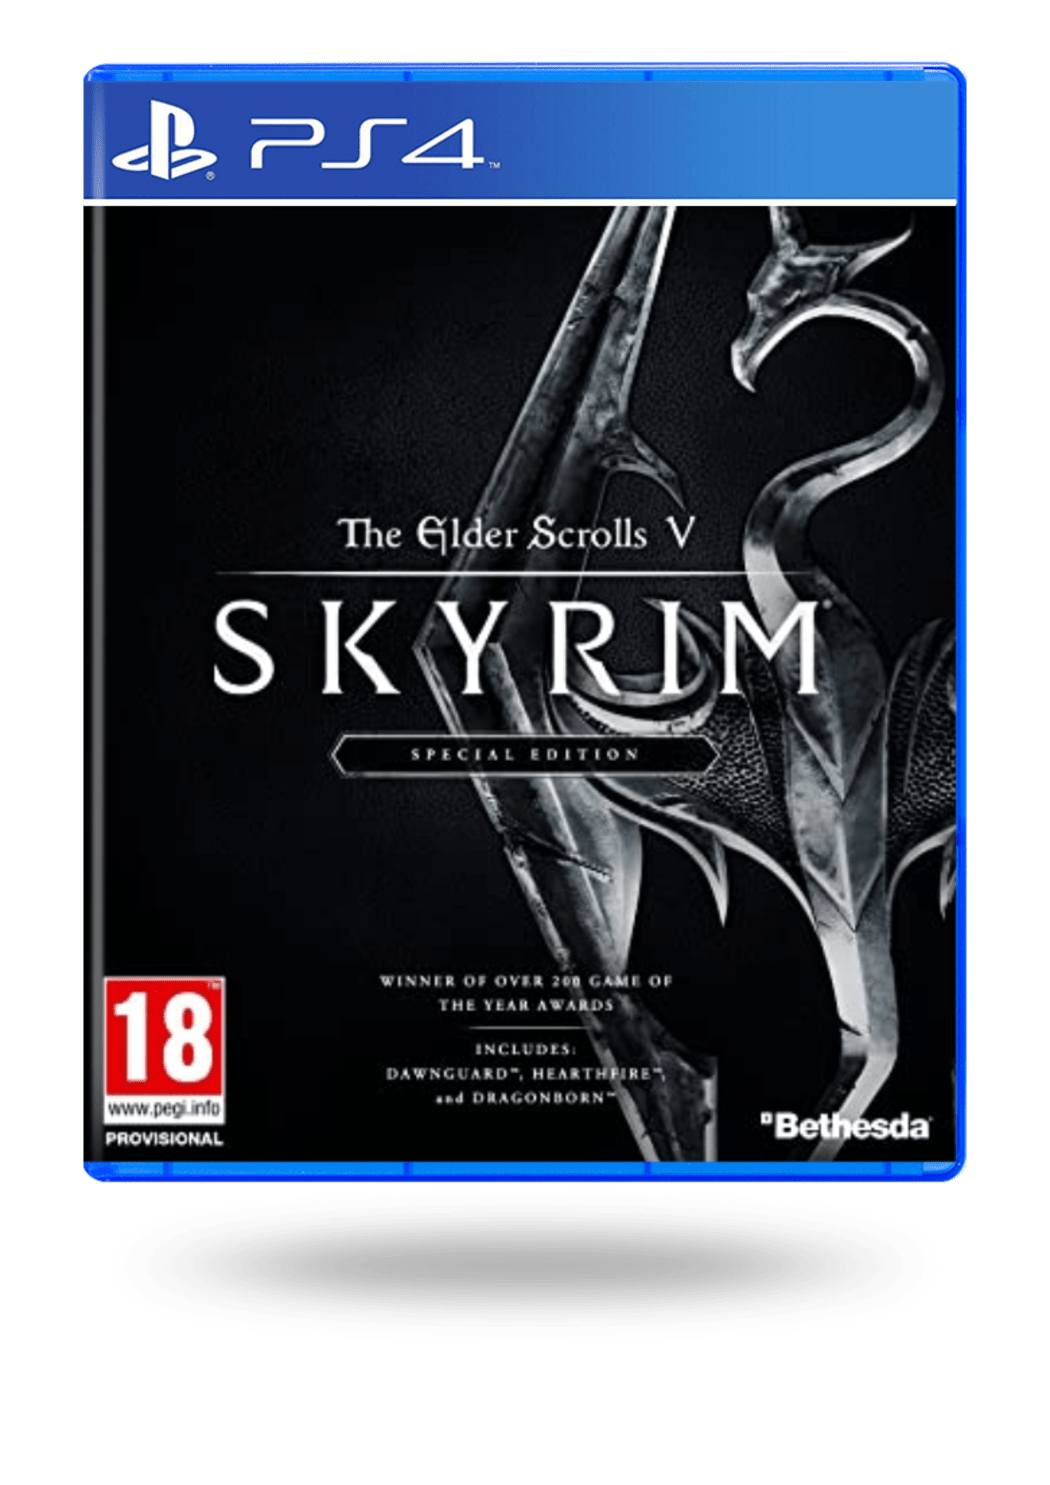 The Elder Scrolls V: Skyrim Special Edition, PS4, Buy Now